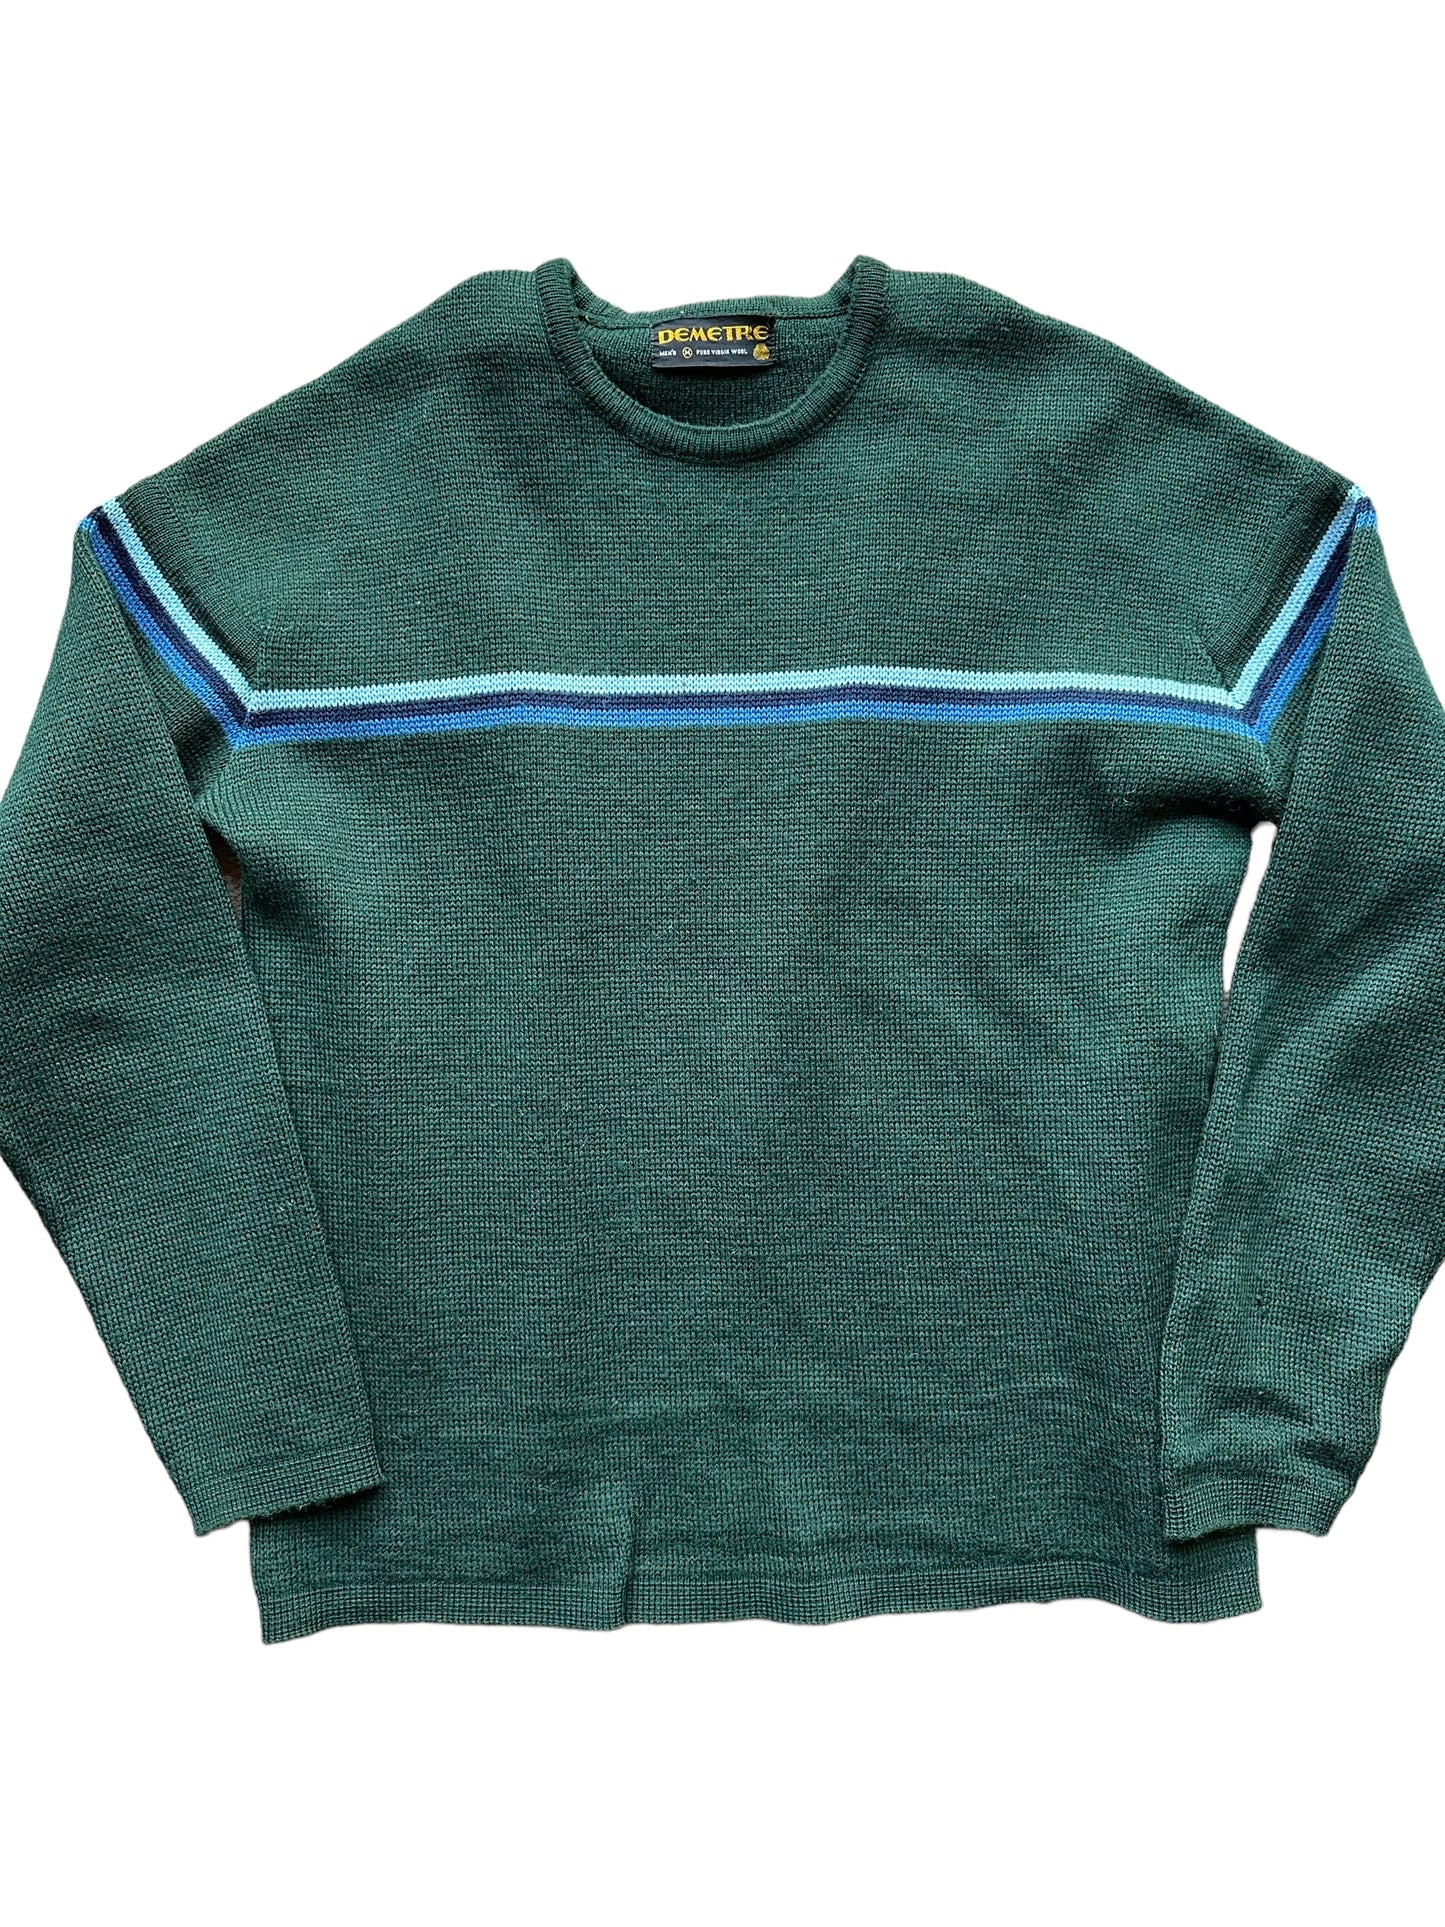 Front View of Vintage Demetre Wool Ski Sweater SZ M |  Vintage Sweaters Seattle | Barn Owl Vintage Seattle